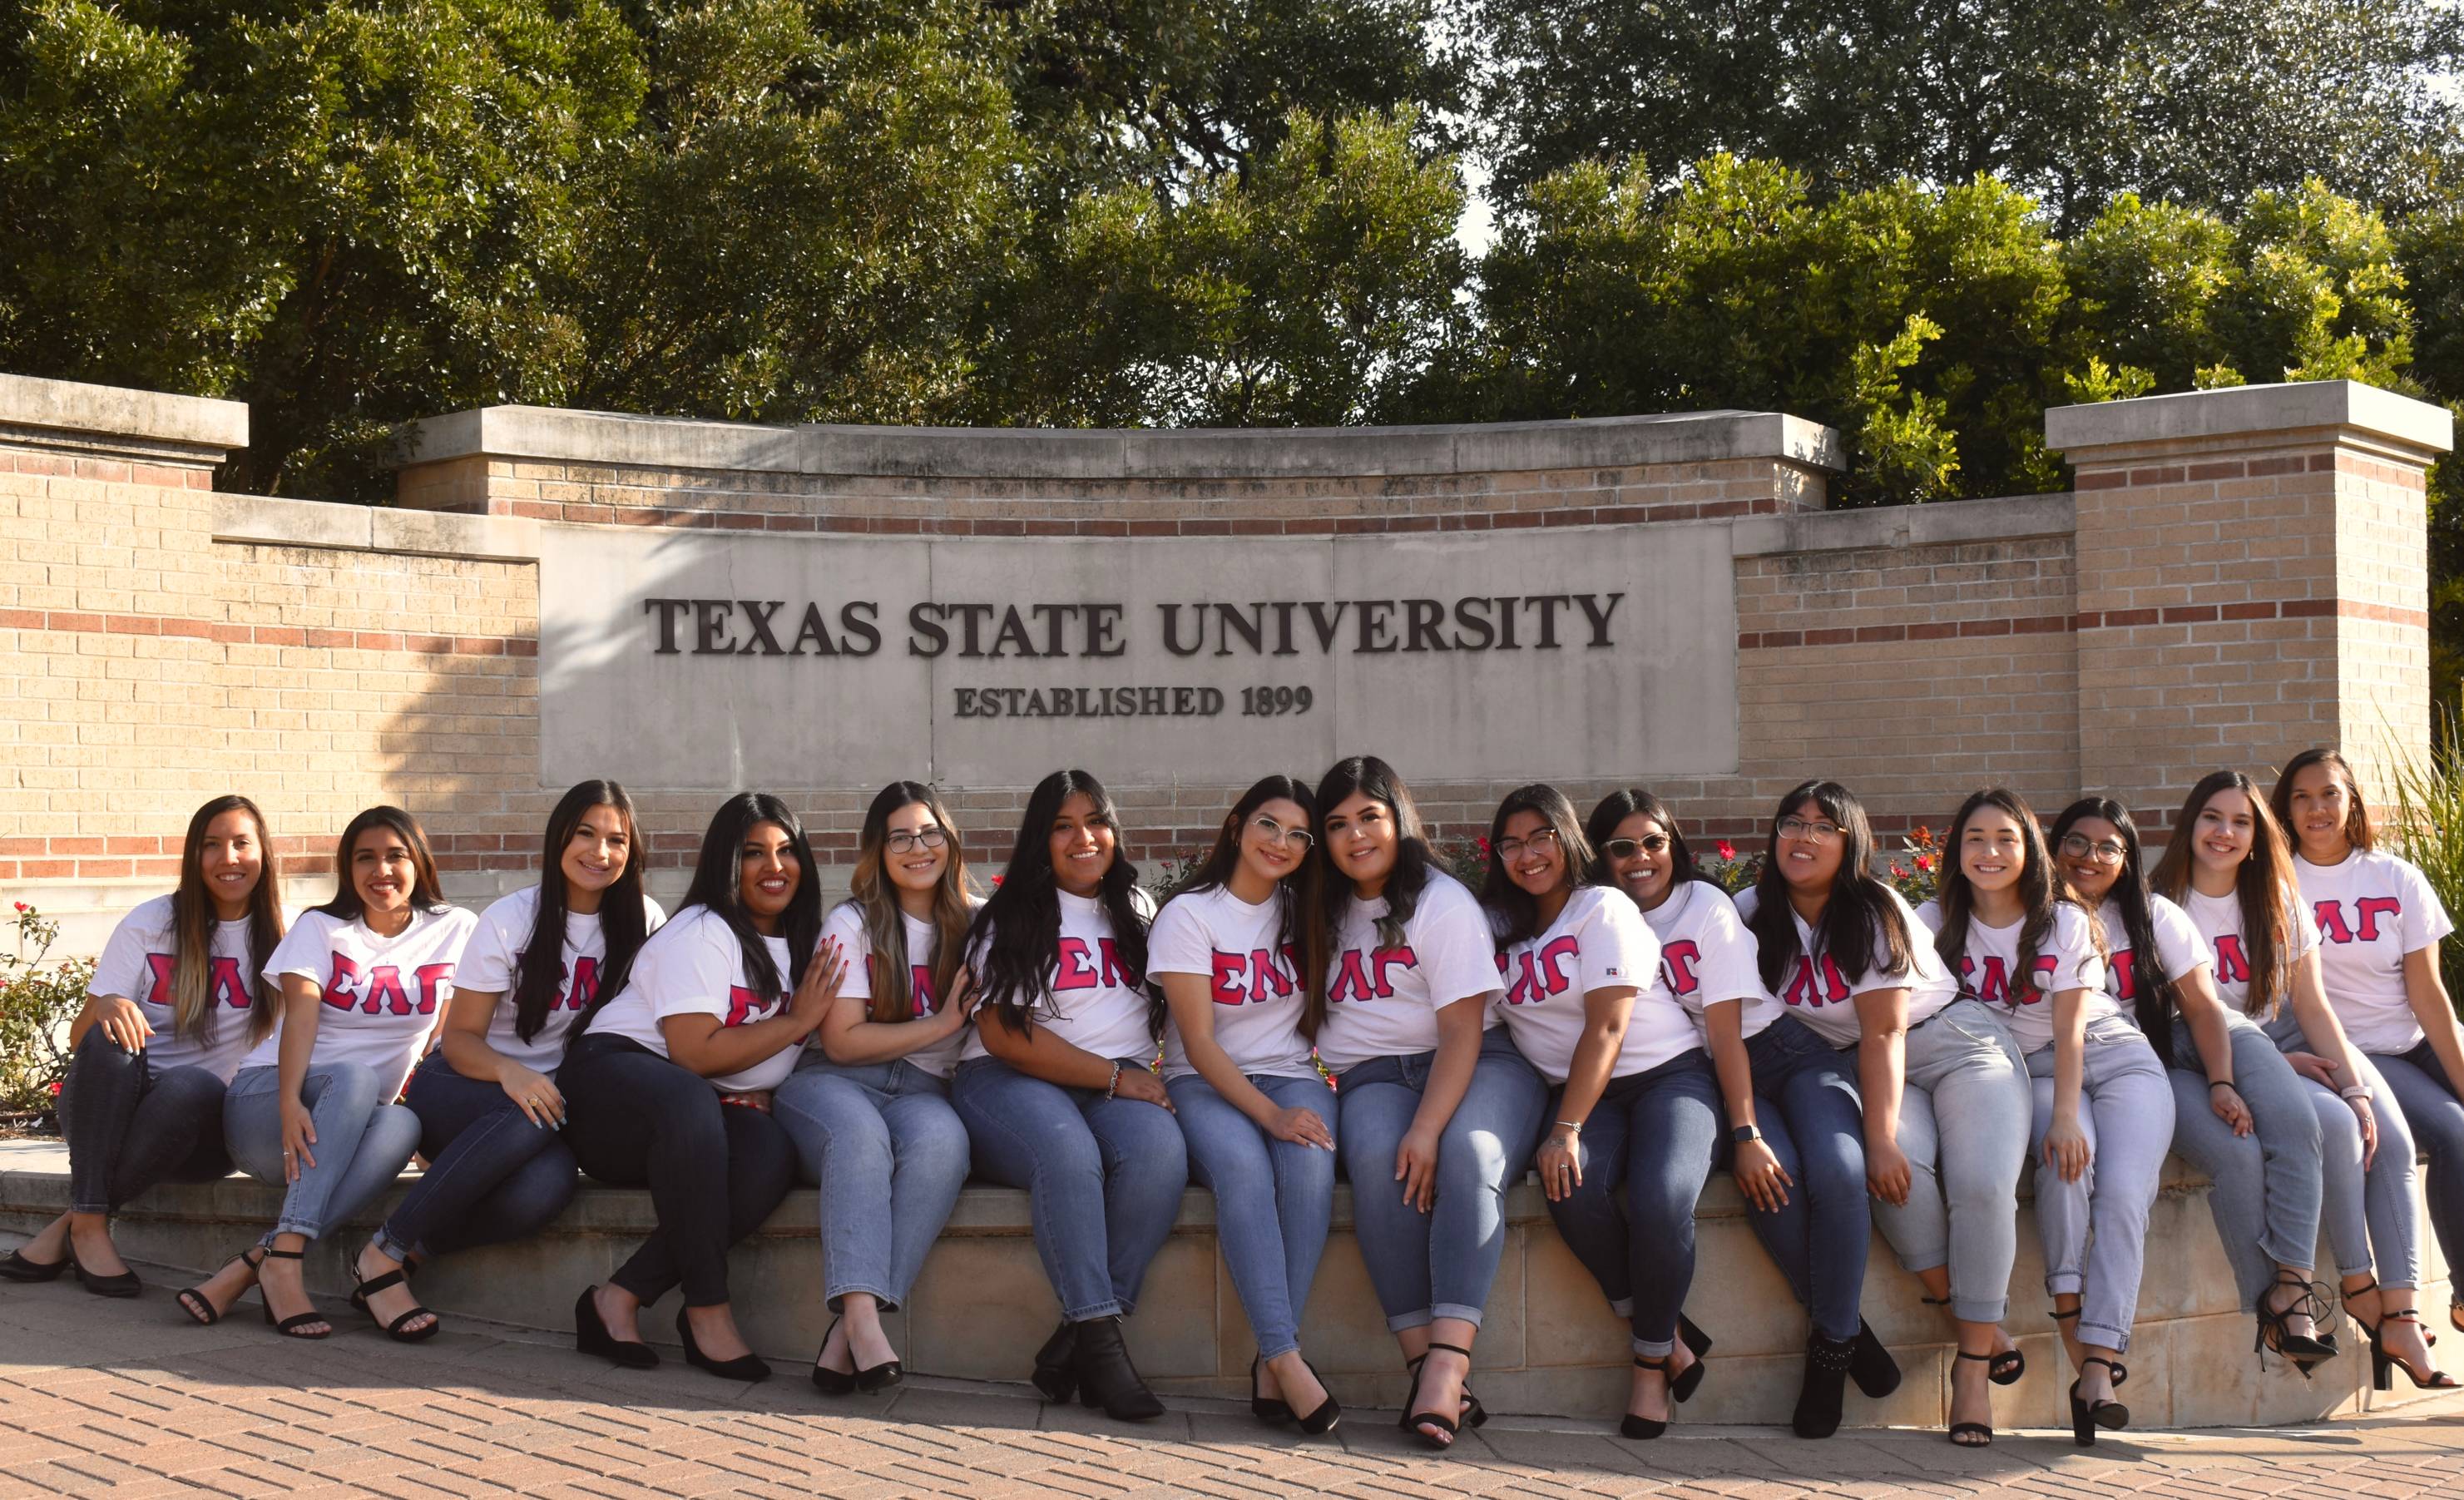 Women of Sigma Lambda Gamma wearing matching organization shirts and posing in front of a Texas State University sign